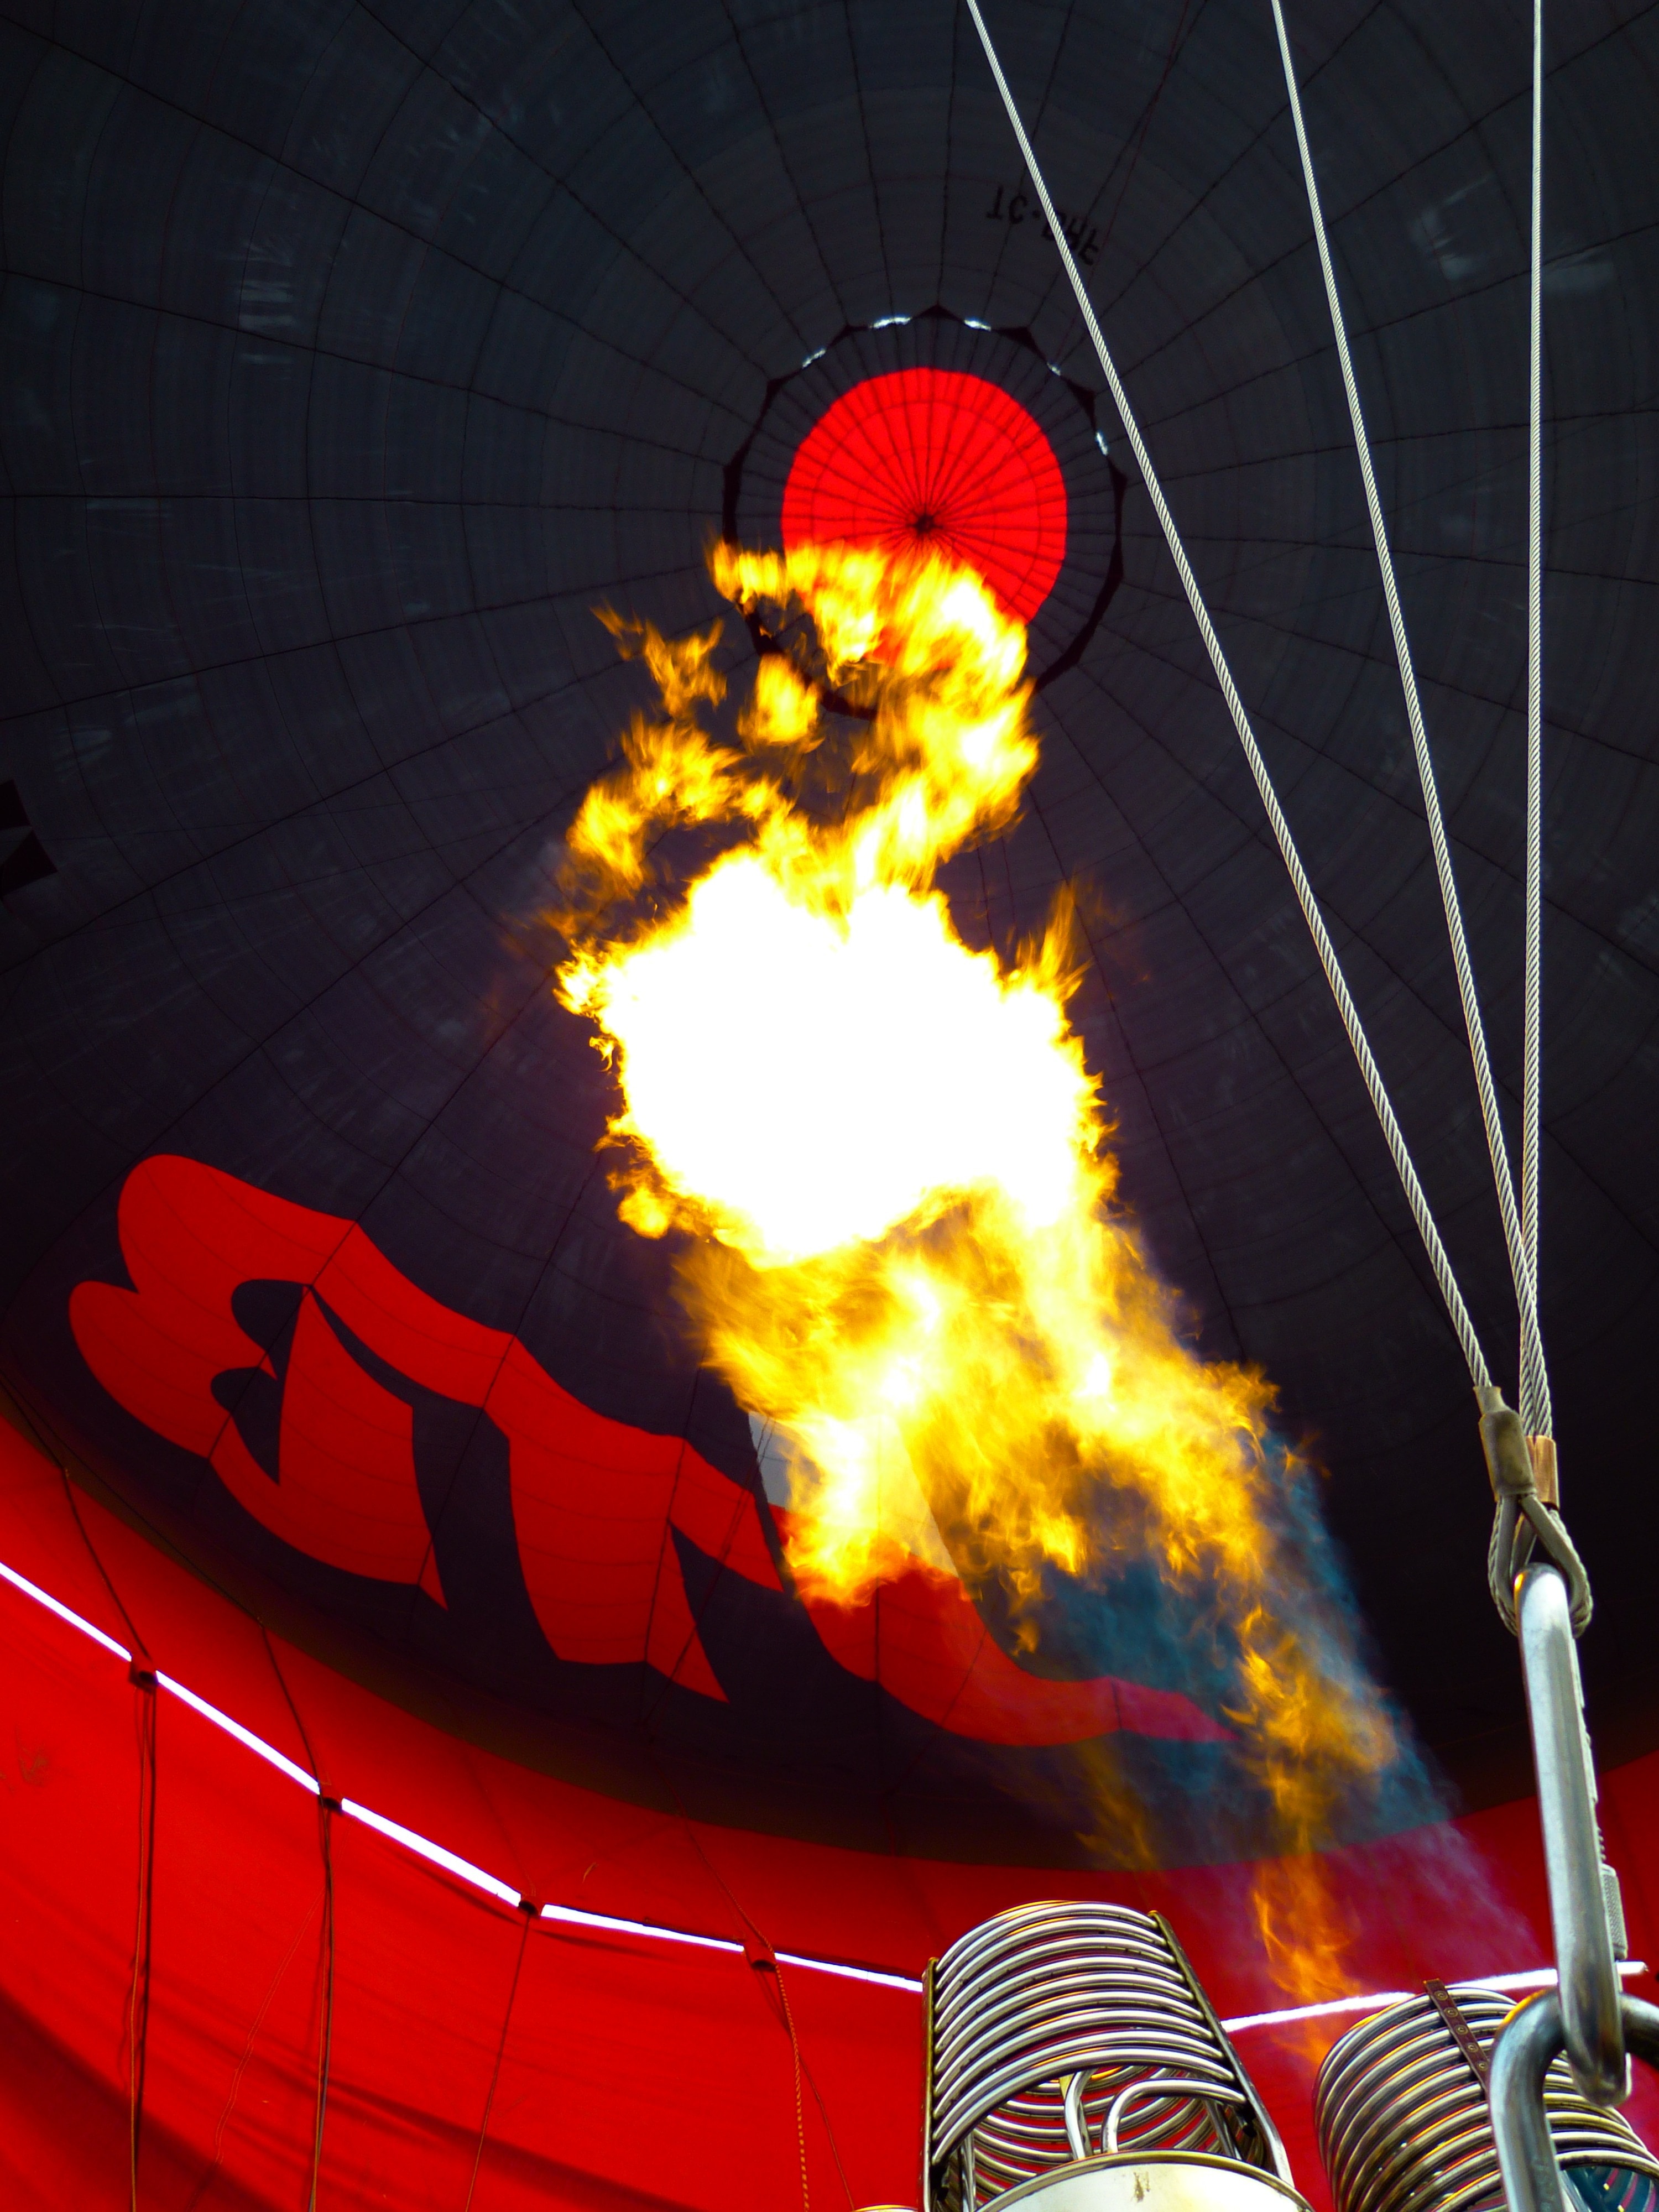 Captive Balloon, Hot Air Balloon, Burner, flame, burning